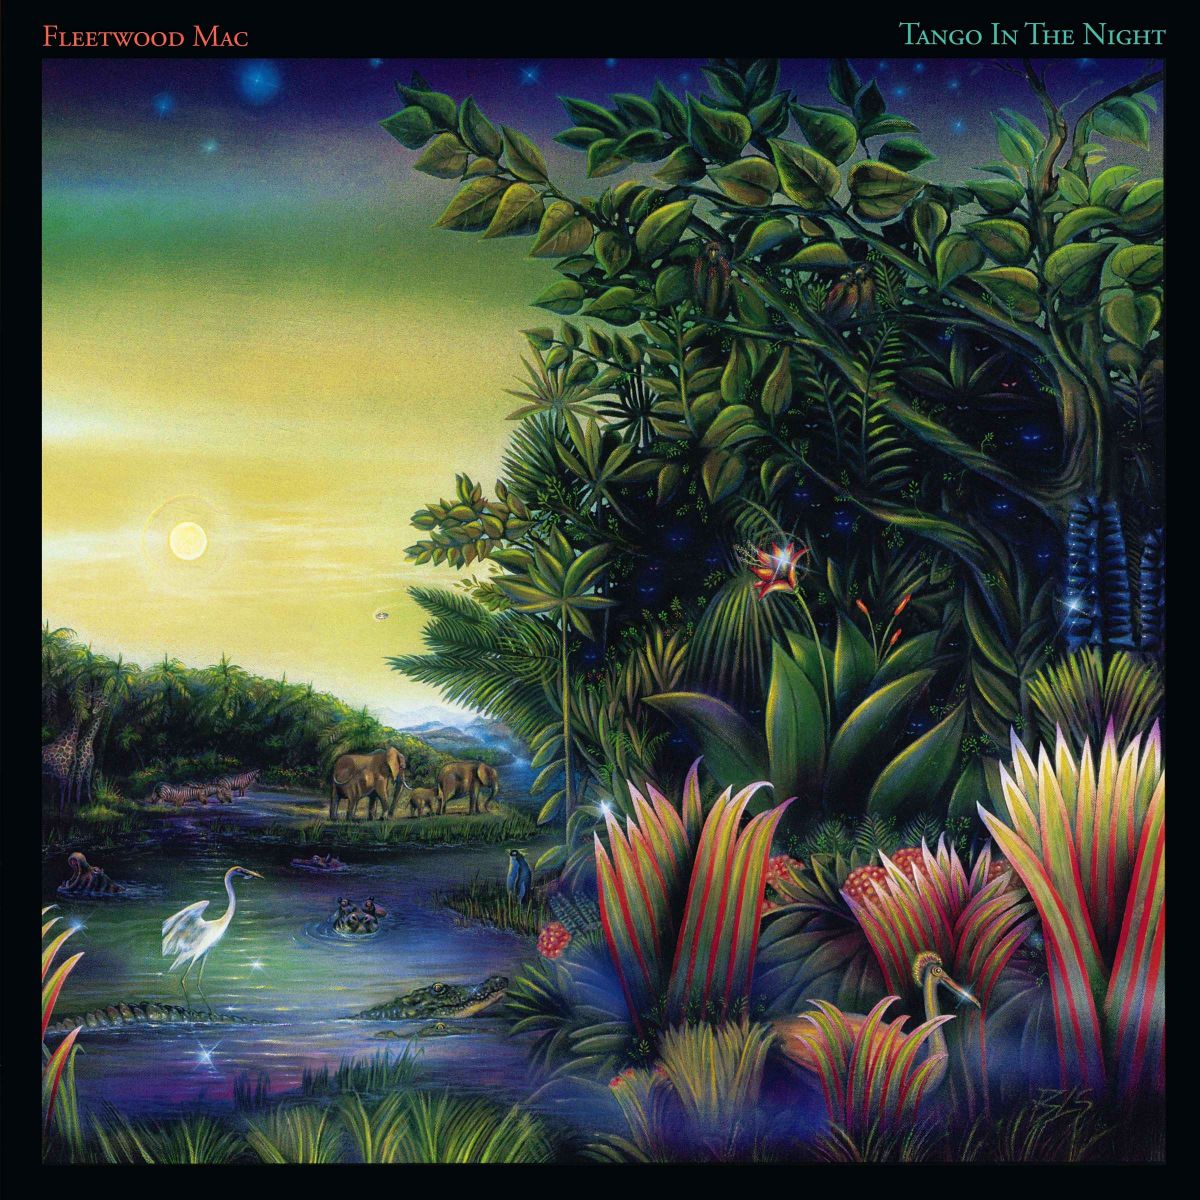 Tango in the Night (Fleetwood Mac Album Cover)